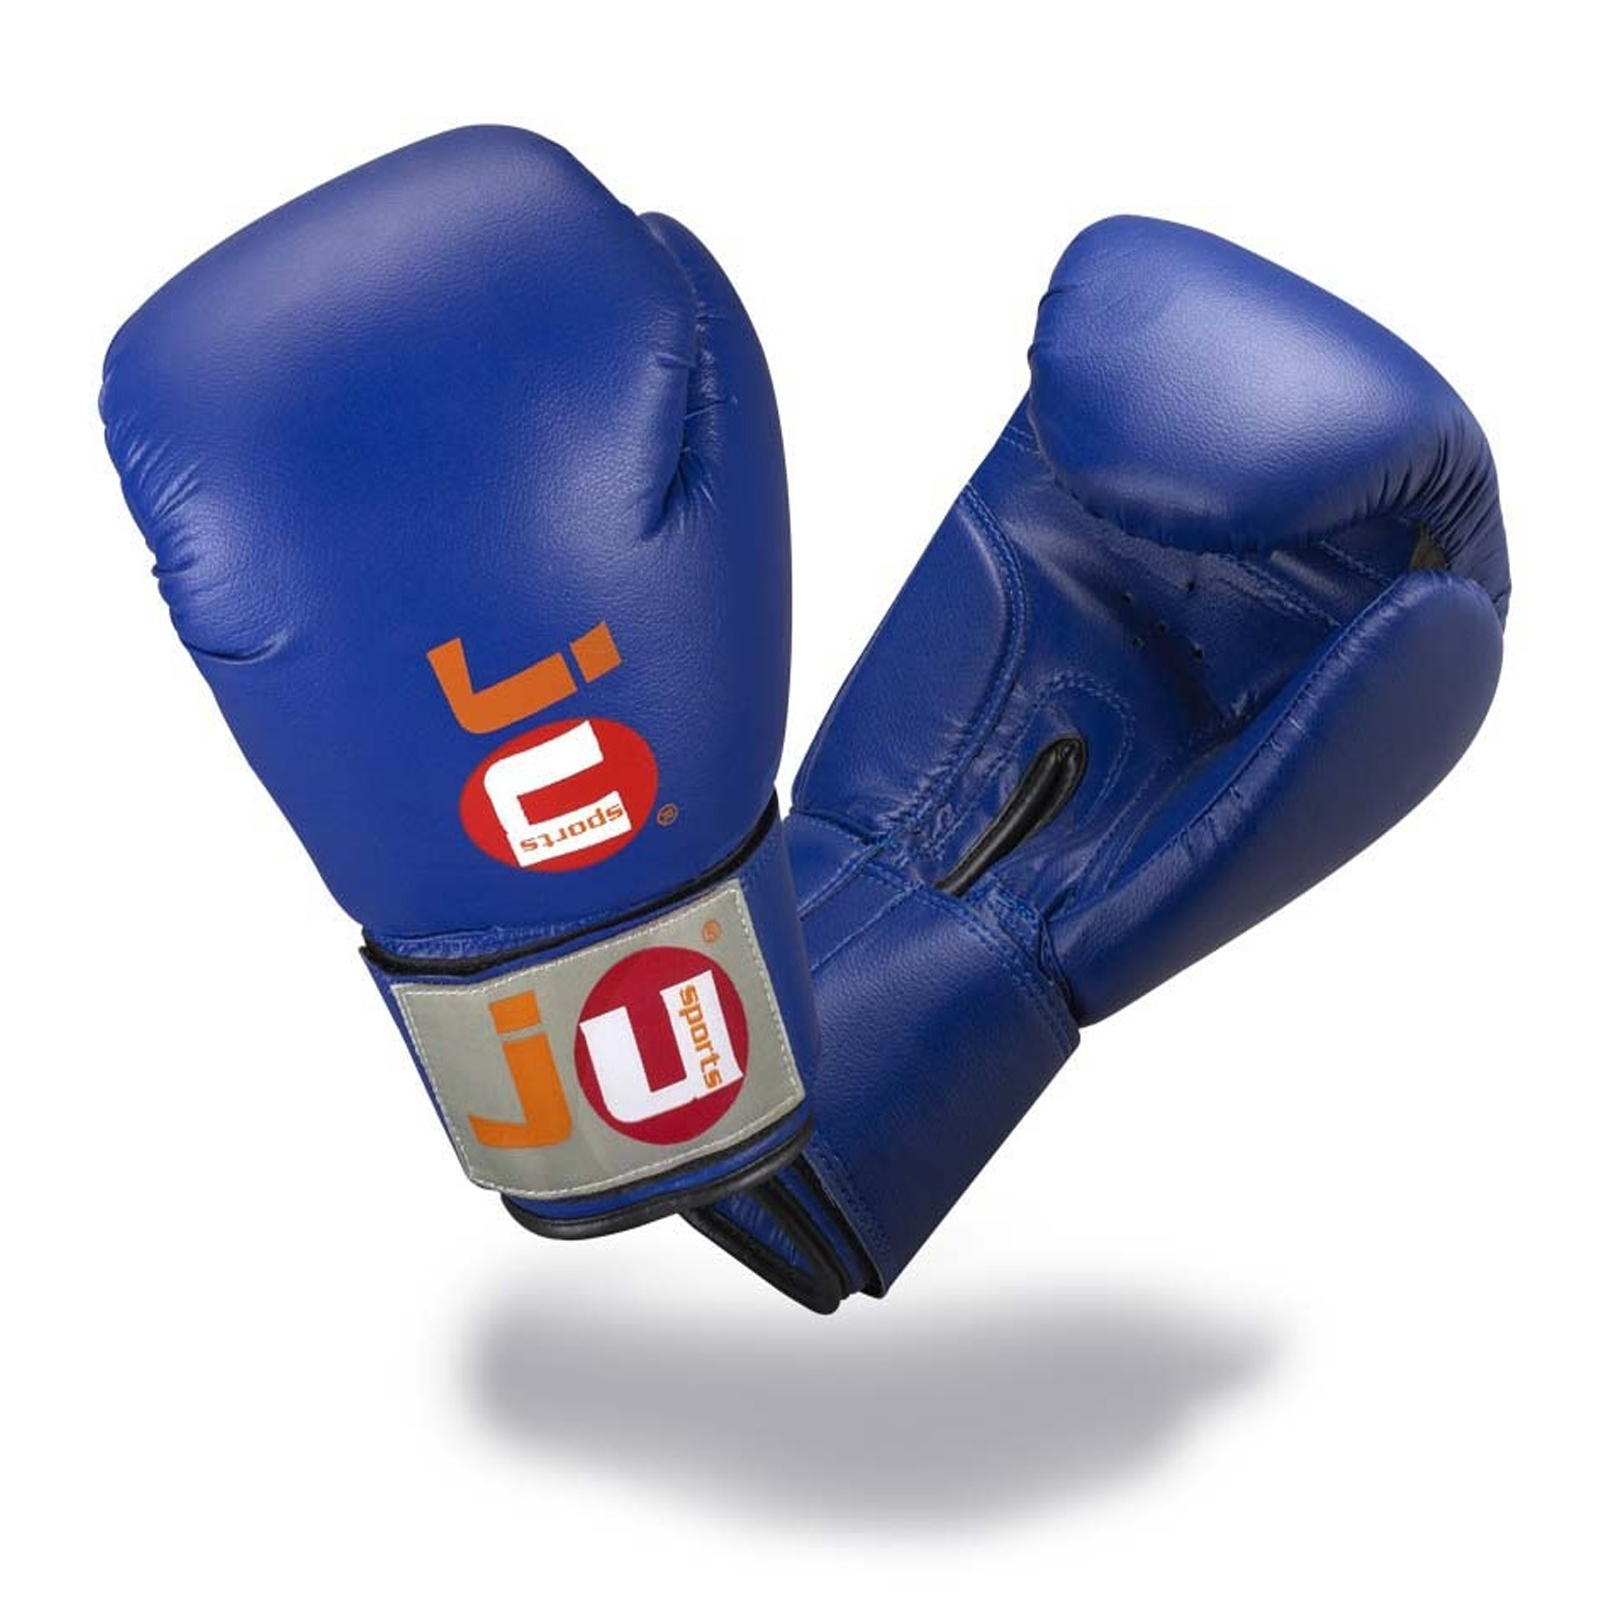 Ju-Sports Boxhandschuhe Training | KAMPFHELDEN blau